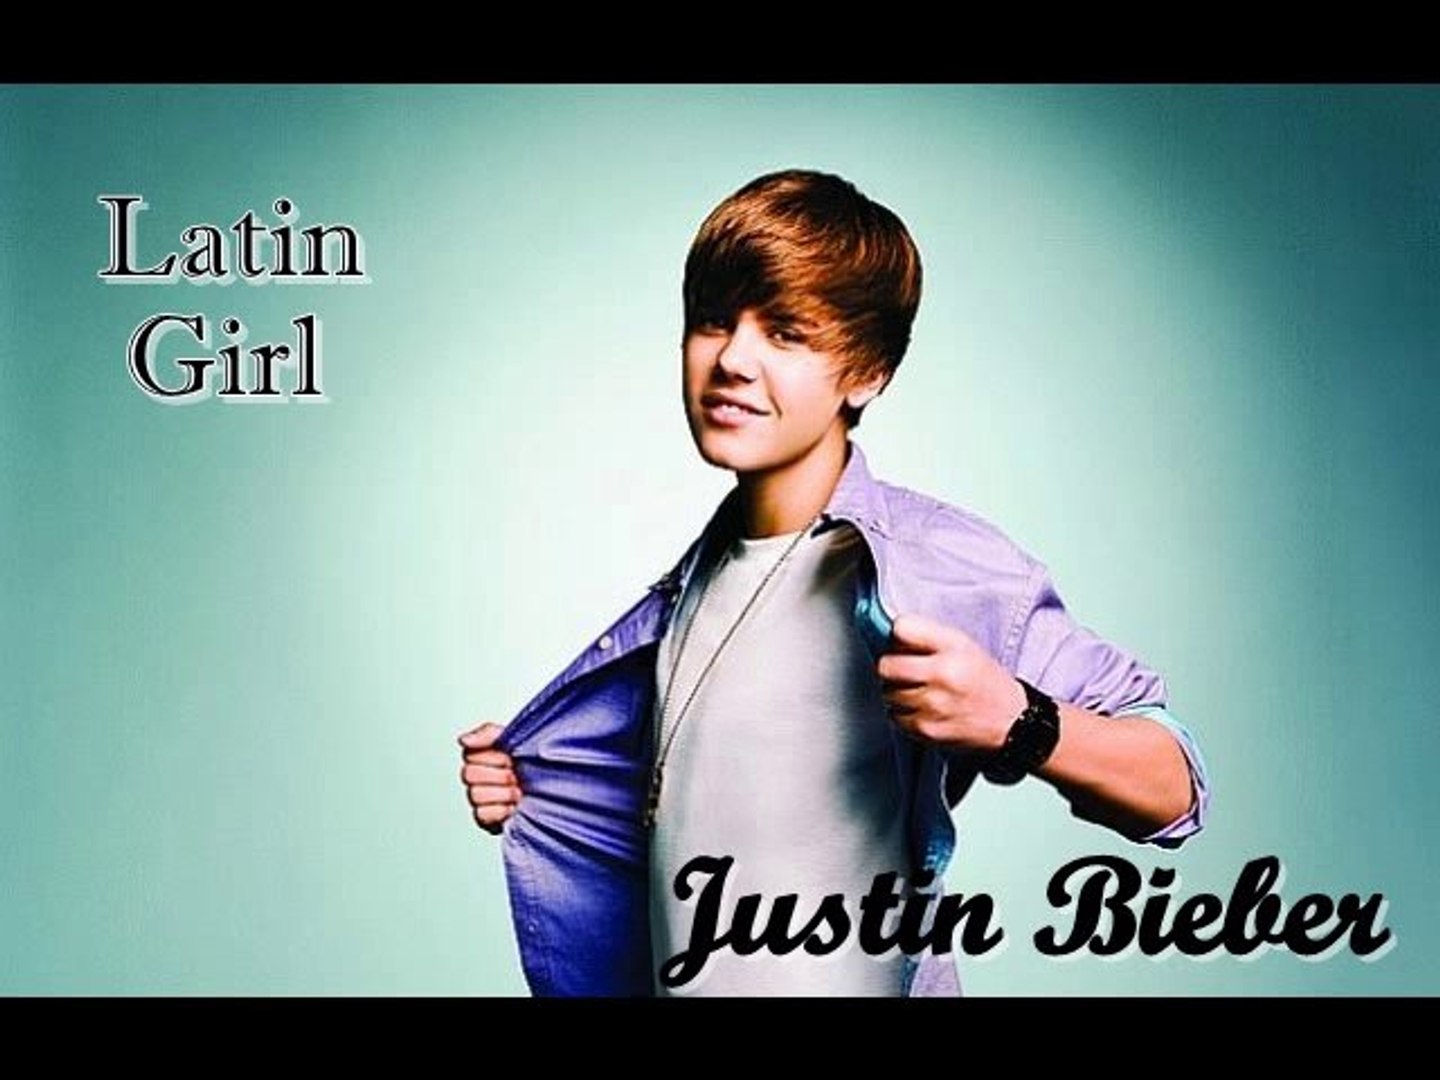 Justin Bieber Latin Girl